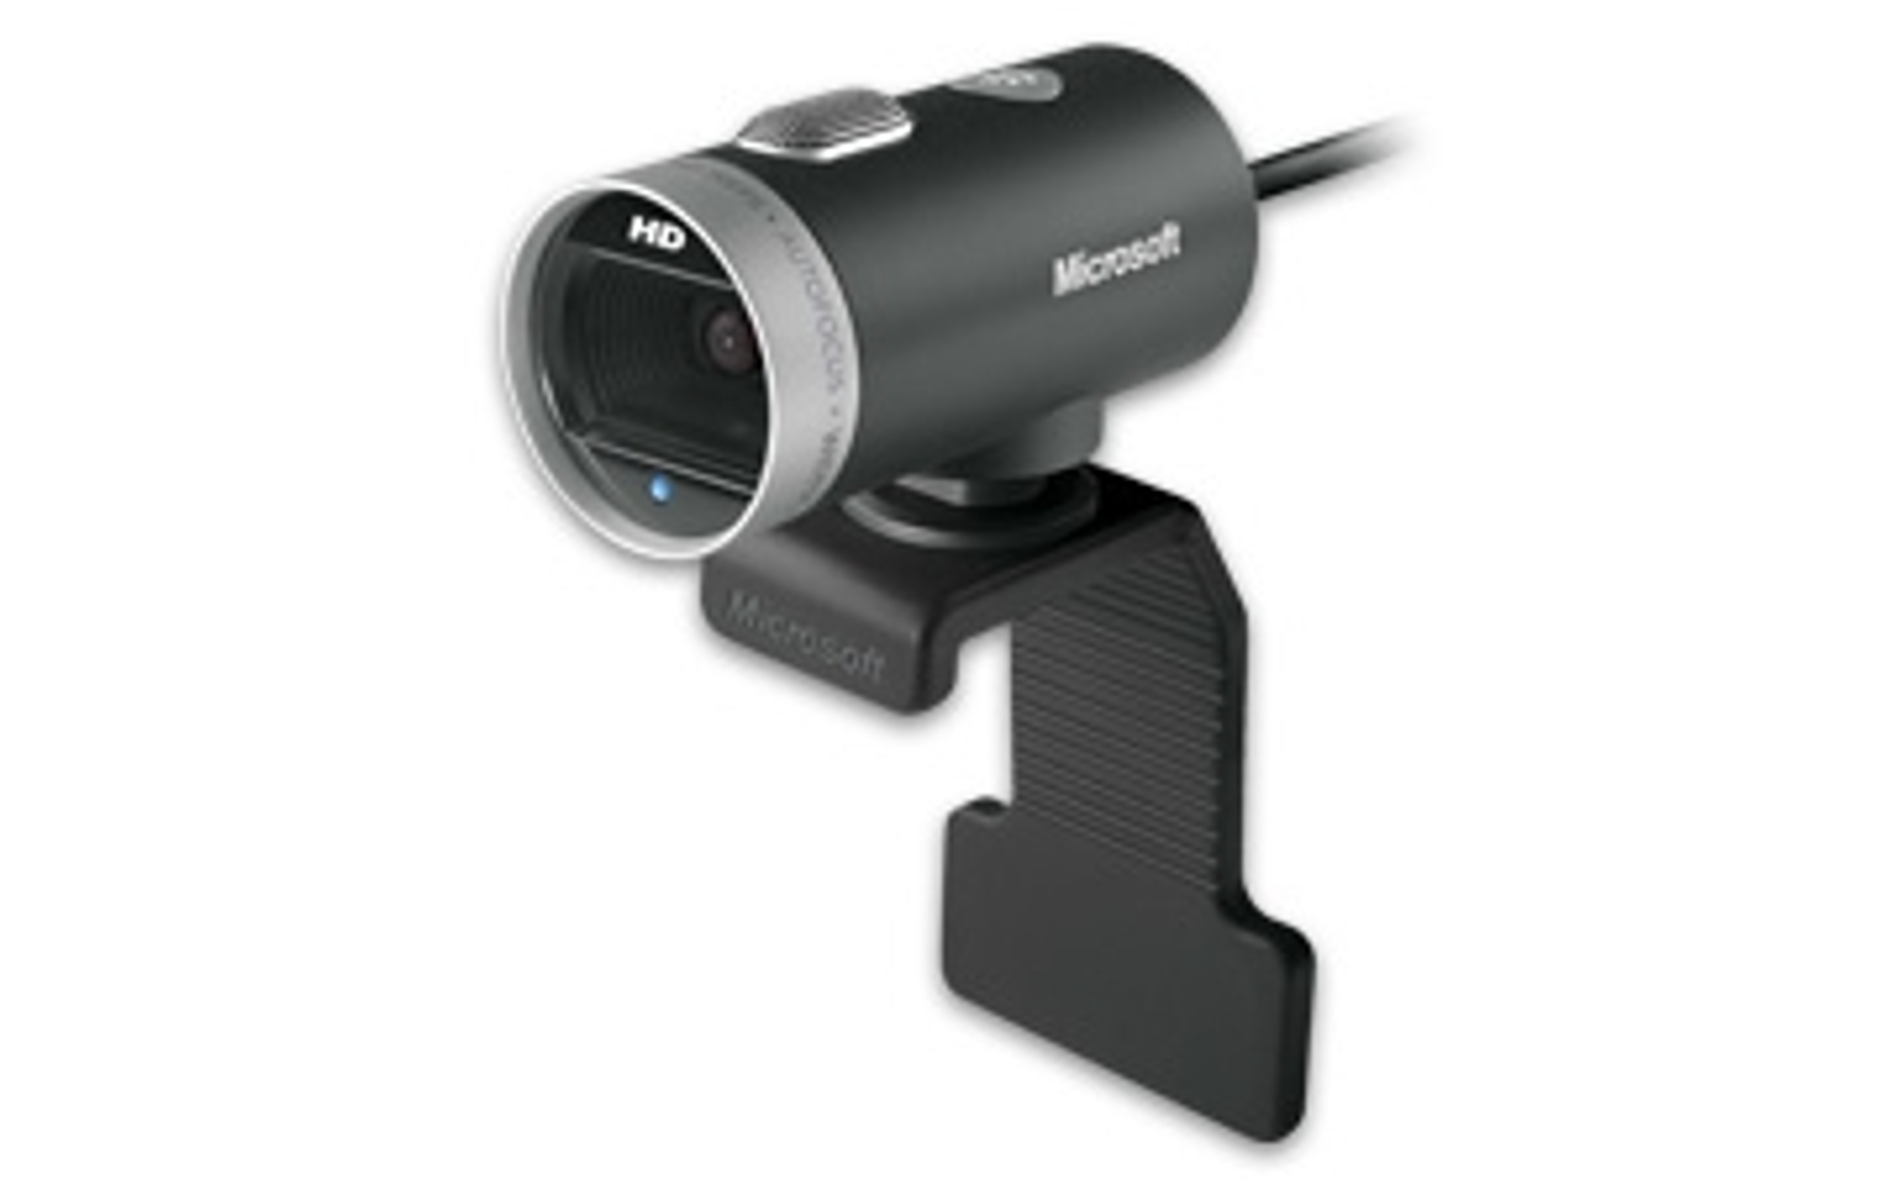 MICROSOFT H5D-00014 LIFECAM CINEMA WIN PORT USB Webcam